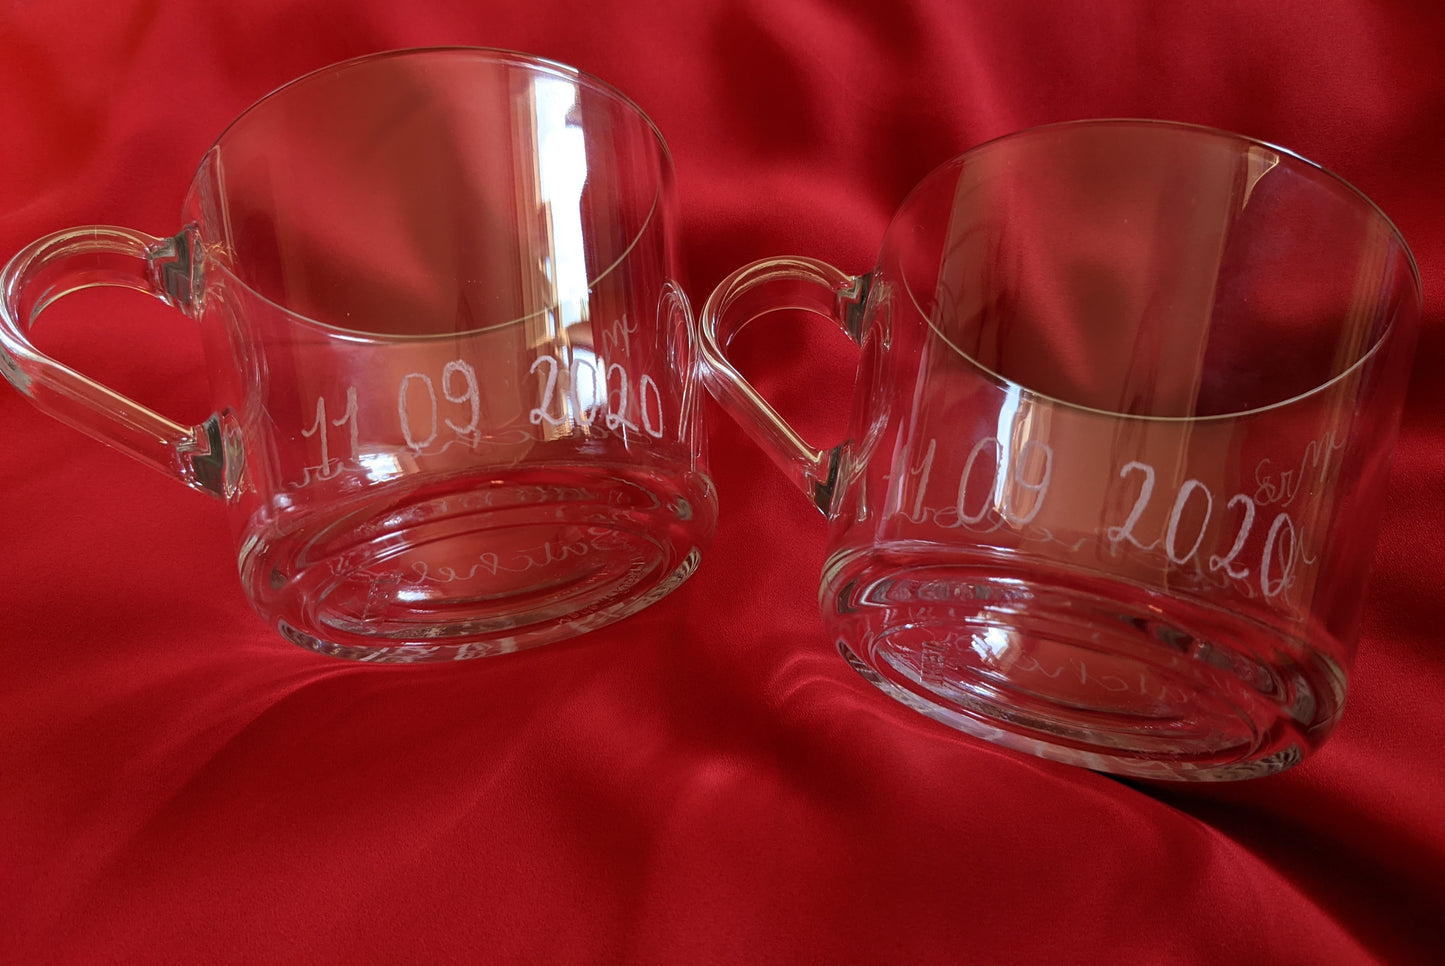 Engraved glass mugs